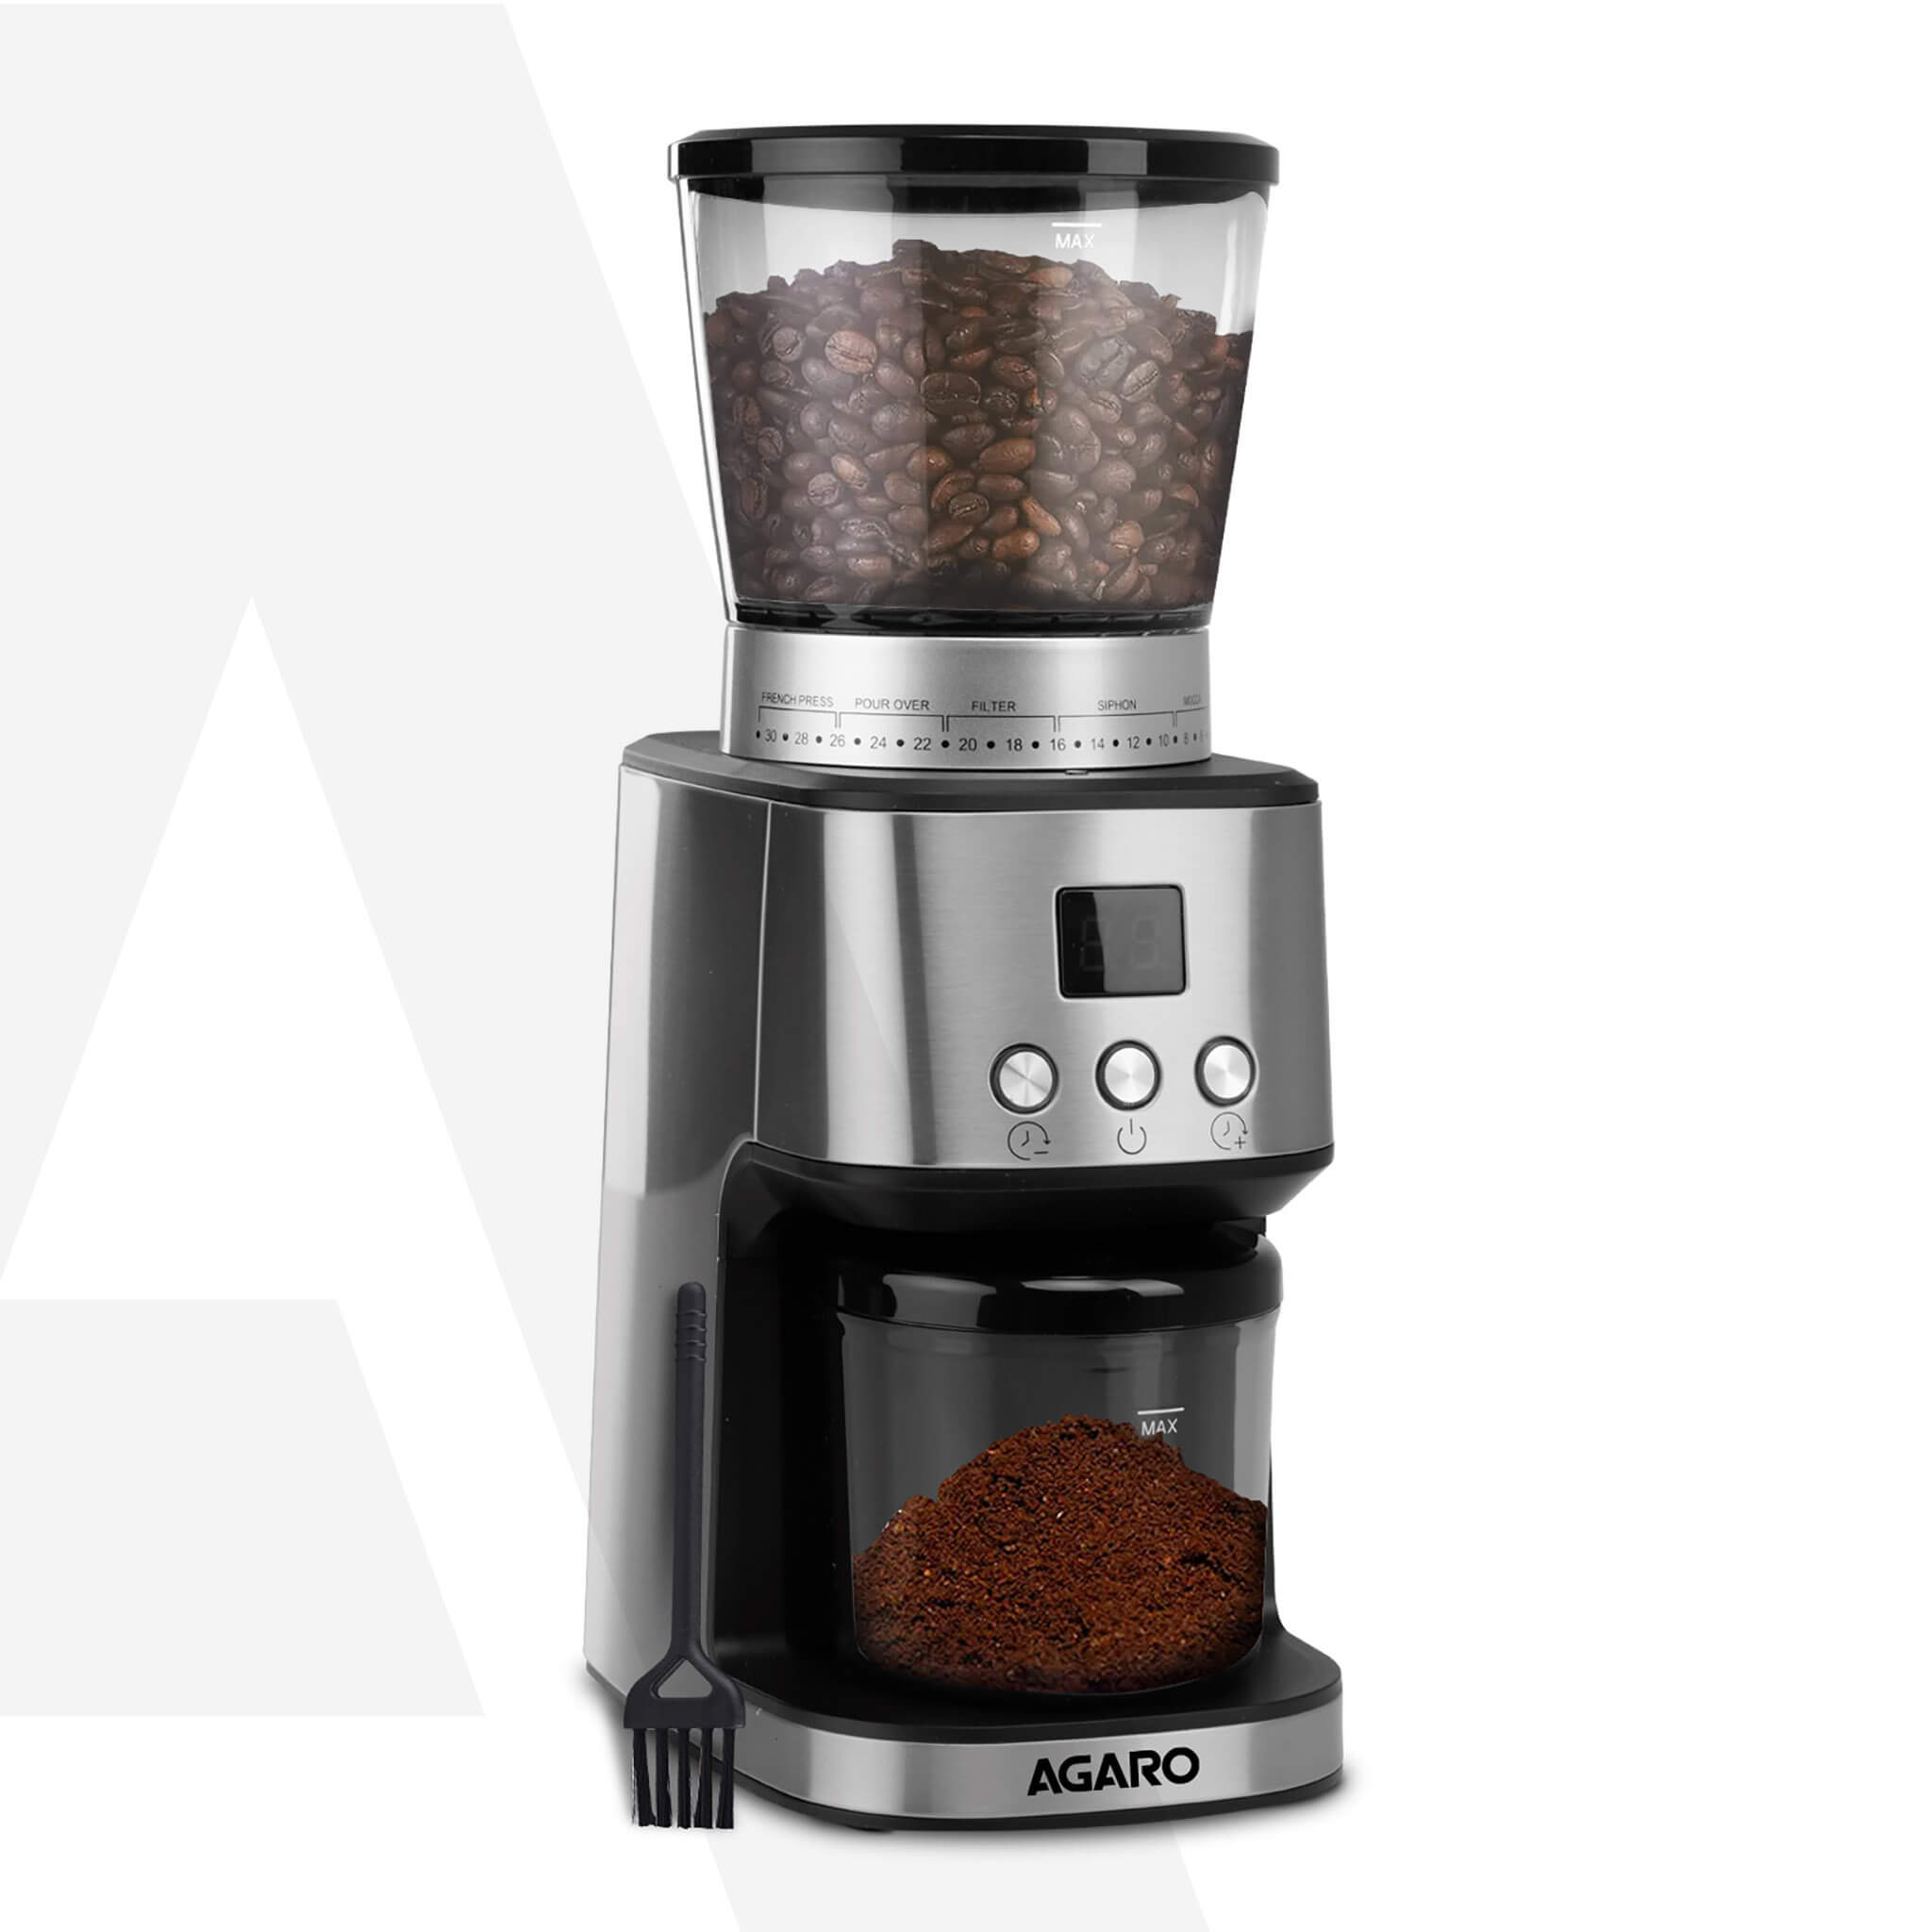 AGARO Grand Coffee Grinder, Stainless Steel Electric, Capacity 60